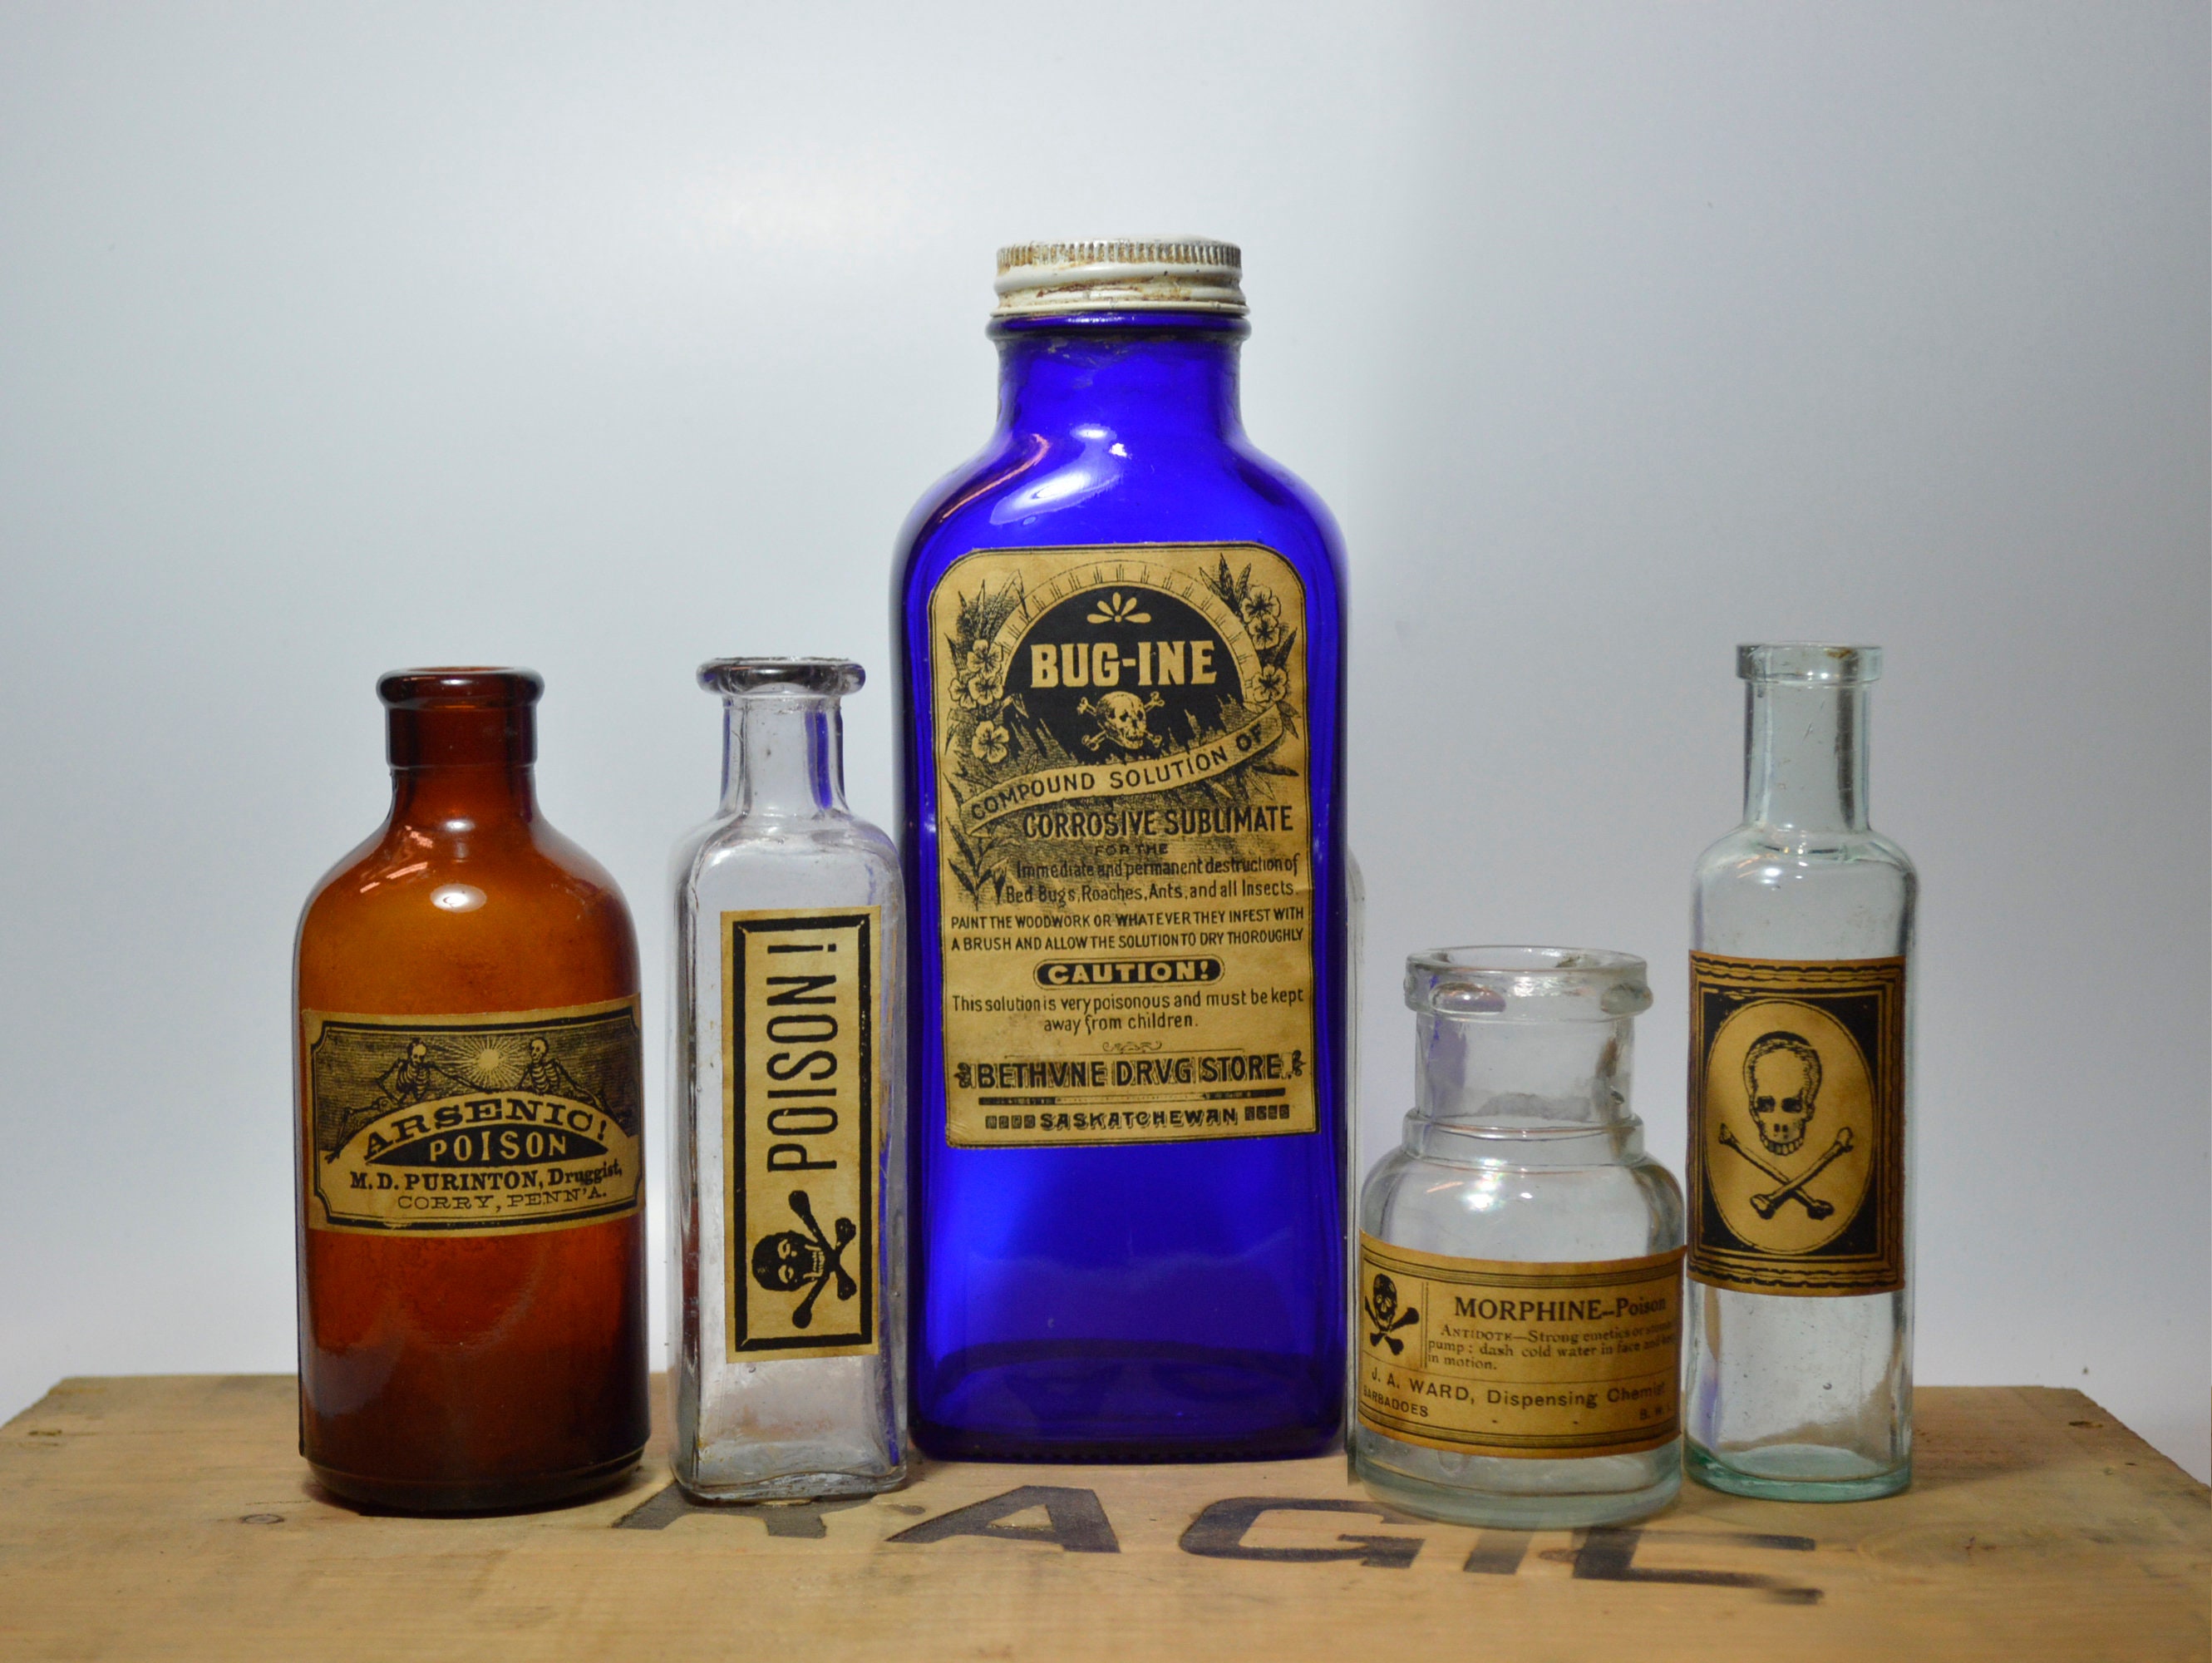 Lait De Magnesie Dr Charles Milk of Magnesia Quebec Antique Medicine Bottle  